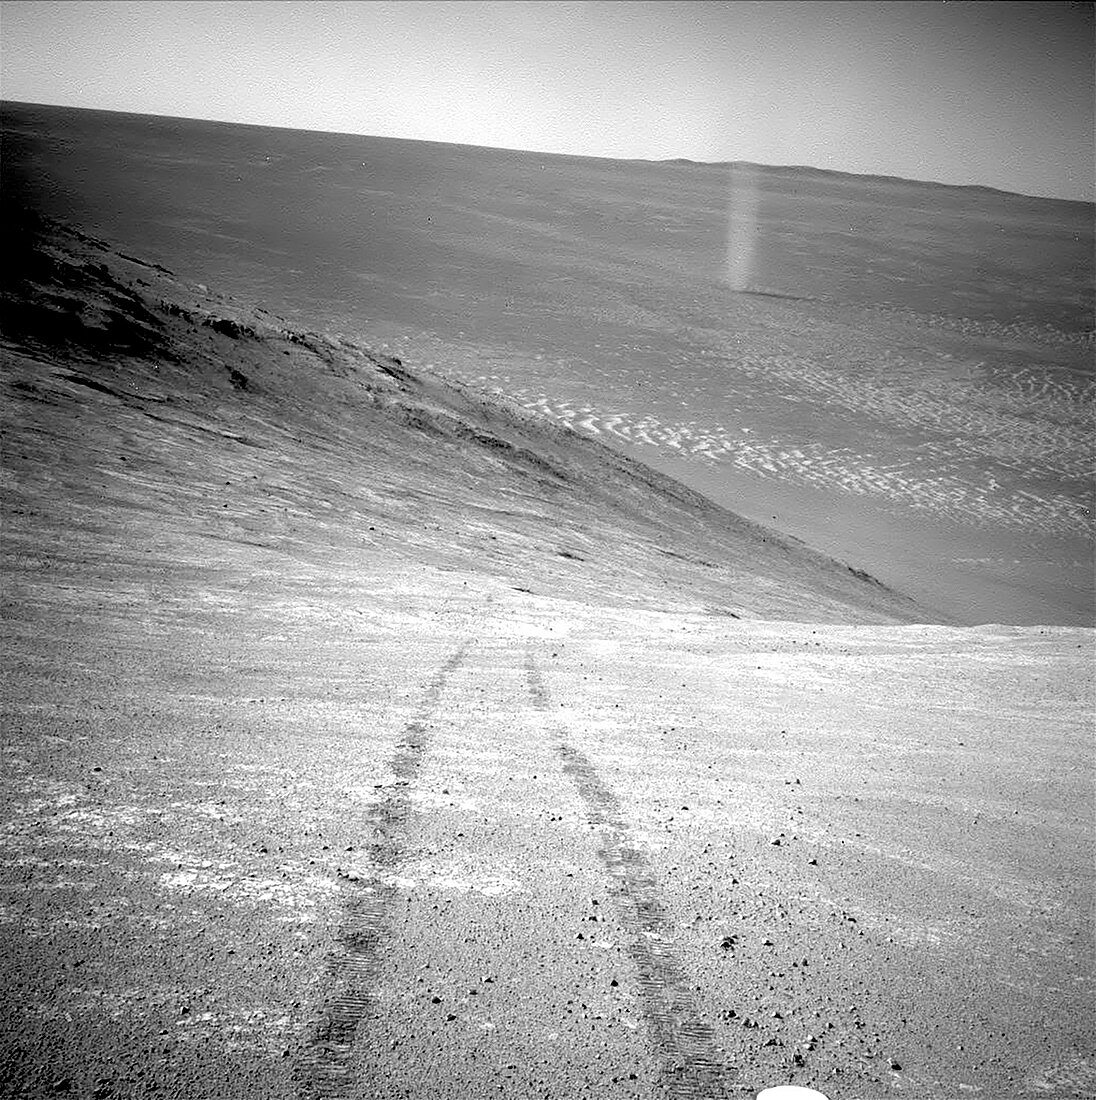 Martian dust devil,Mars rover image